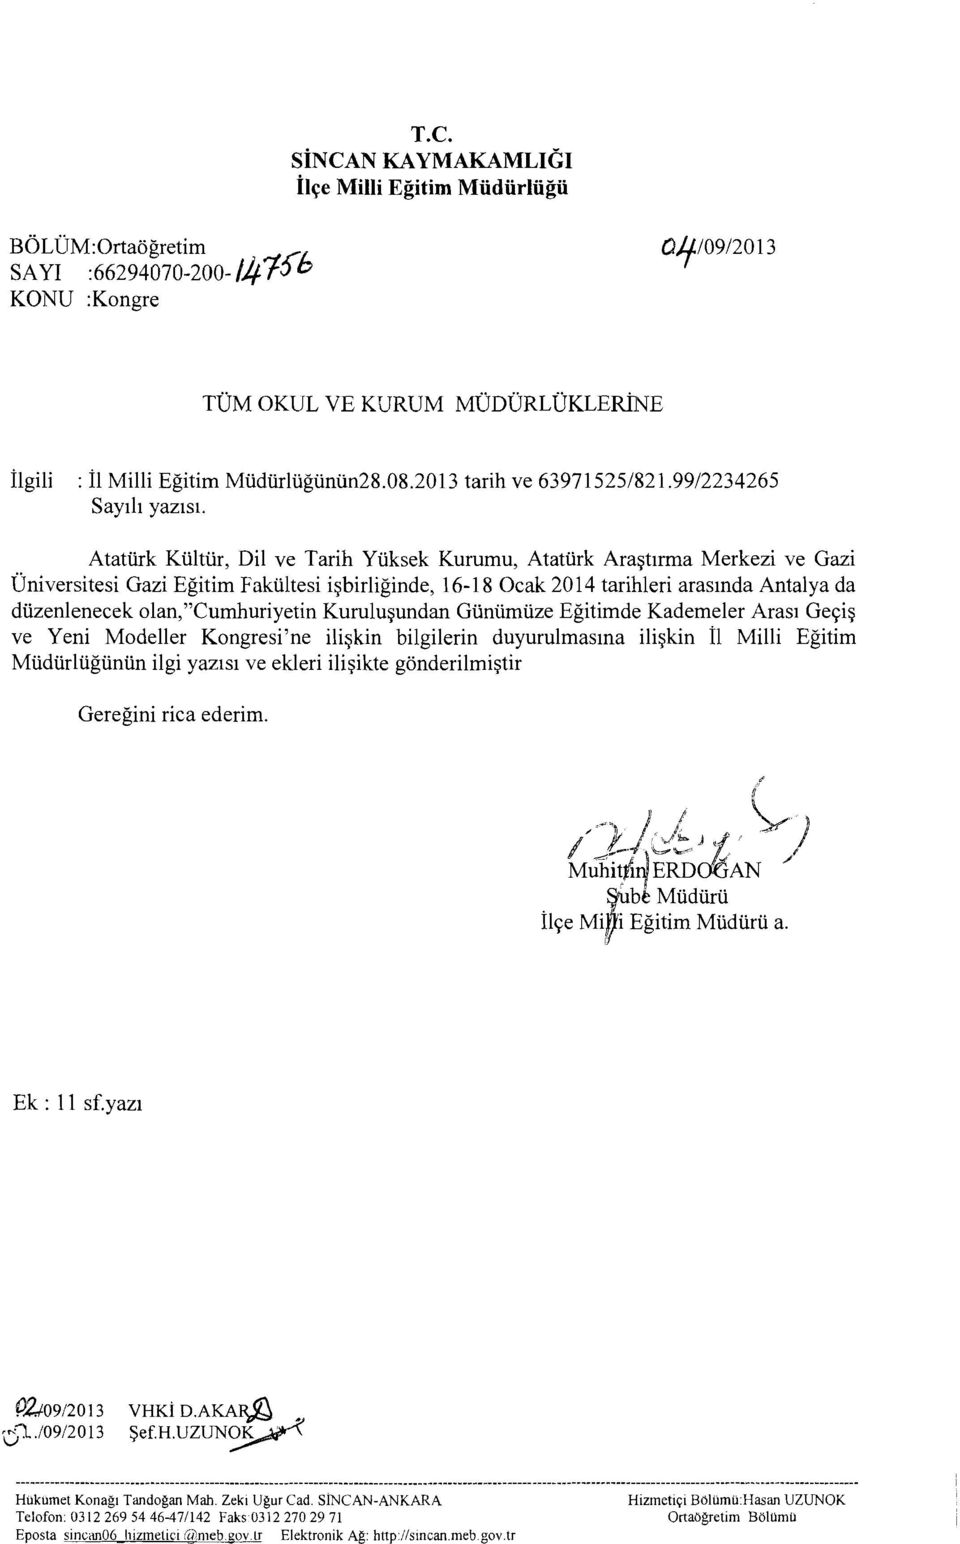 Ataturk Kiiltur, Dil ve Tarih Yuksek Kurumu, Ataturk Araqtinna Merkezi ve Gazi ~niversitesi Gazi Egitim Fakultesi i~birliginde, 16-18 Ocak 2014 tarihleri arasinda Antalya da diizenlenecek